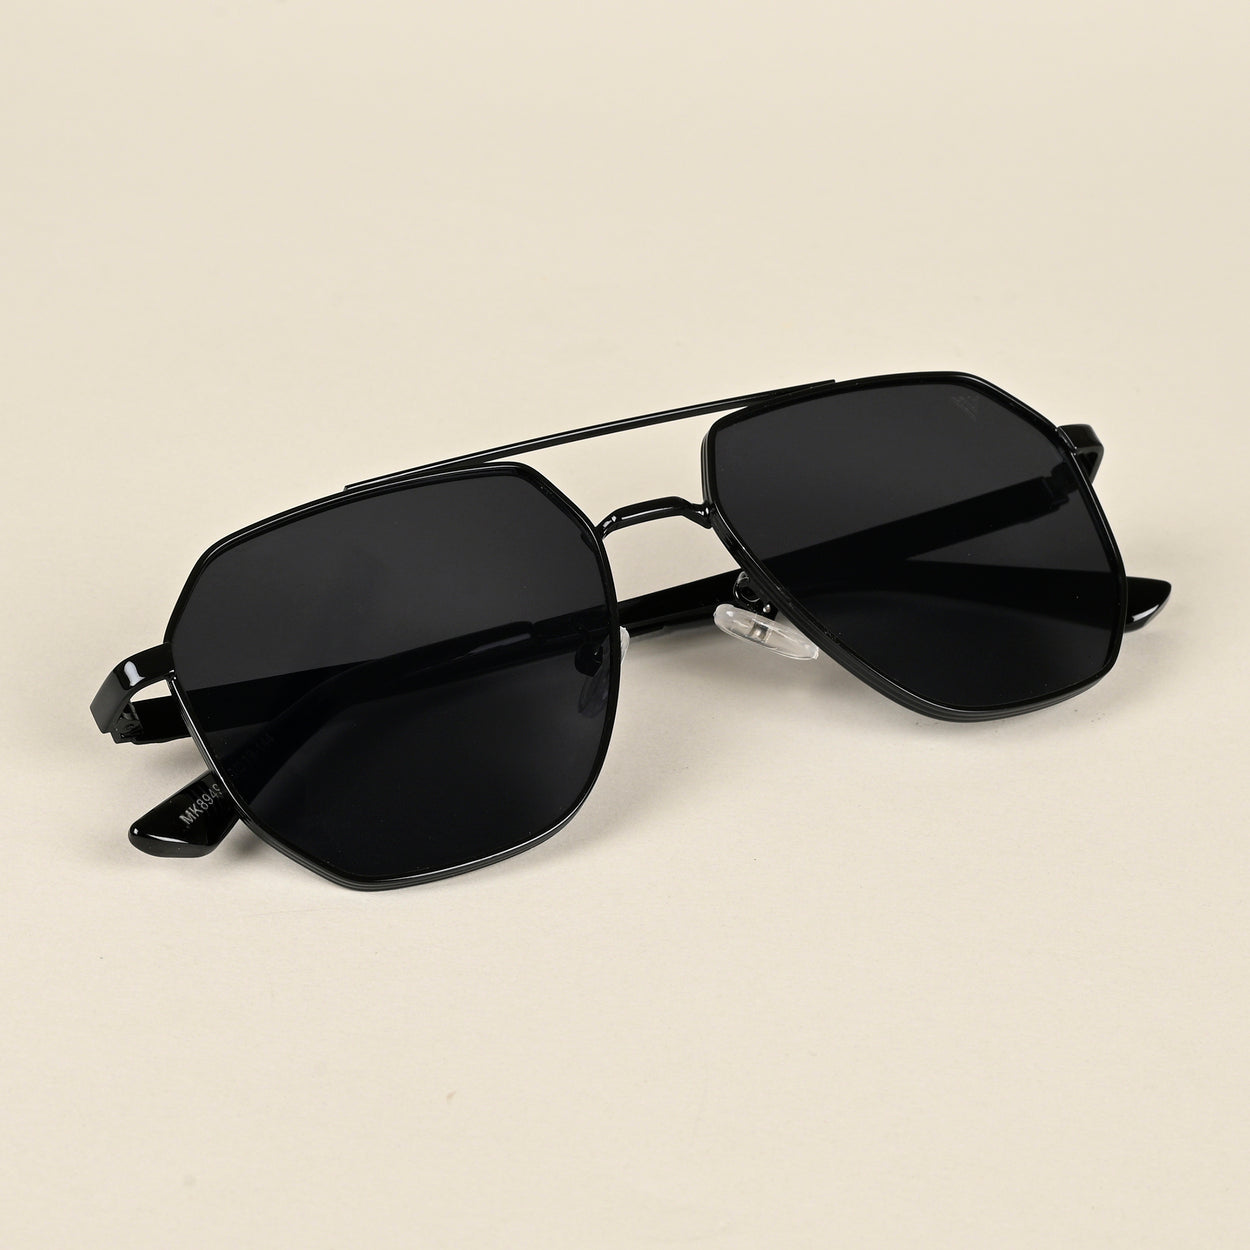 Voyage Black weyfarer Sunglasses for Men & Women (8949MG4324)